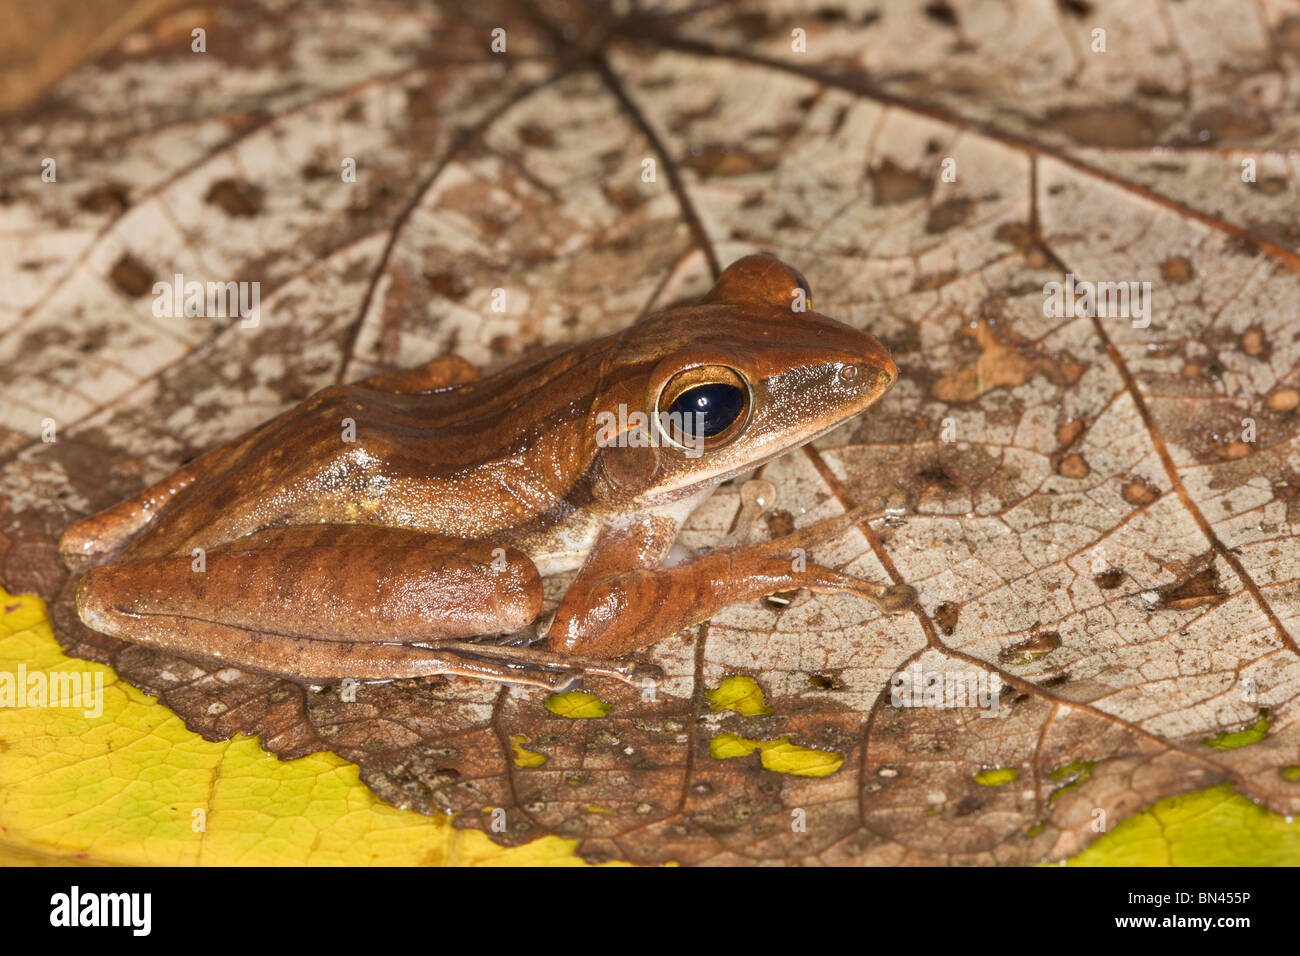 Four-lined Tree Frog, Polypedates leucomystax Stock Photo